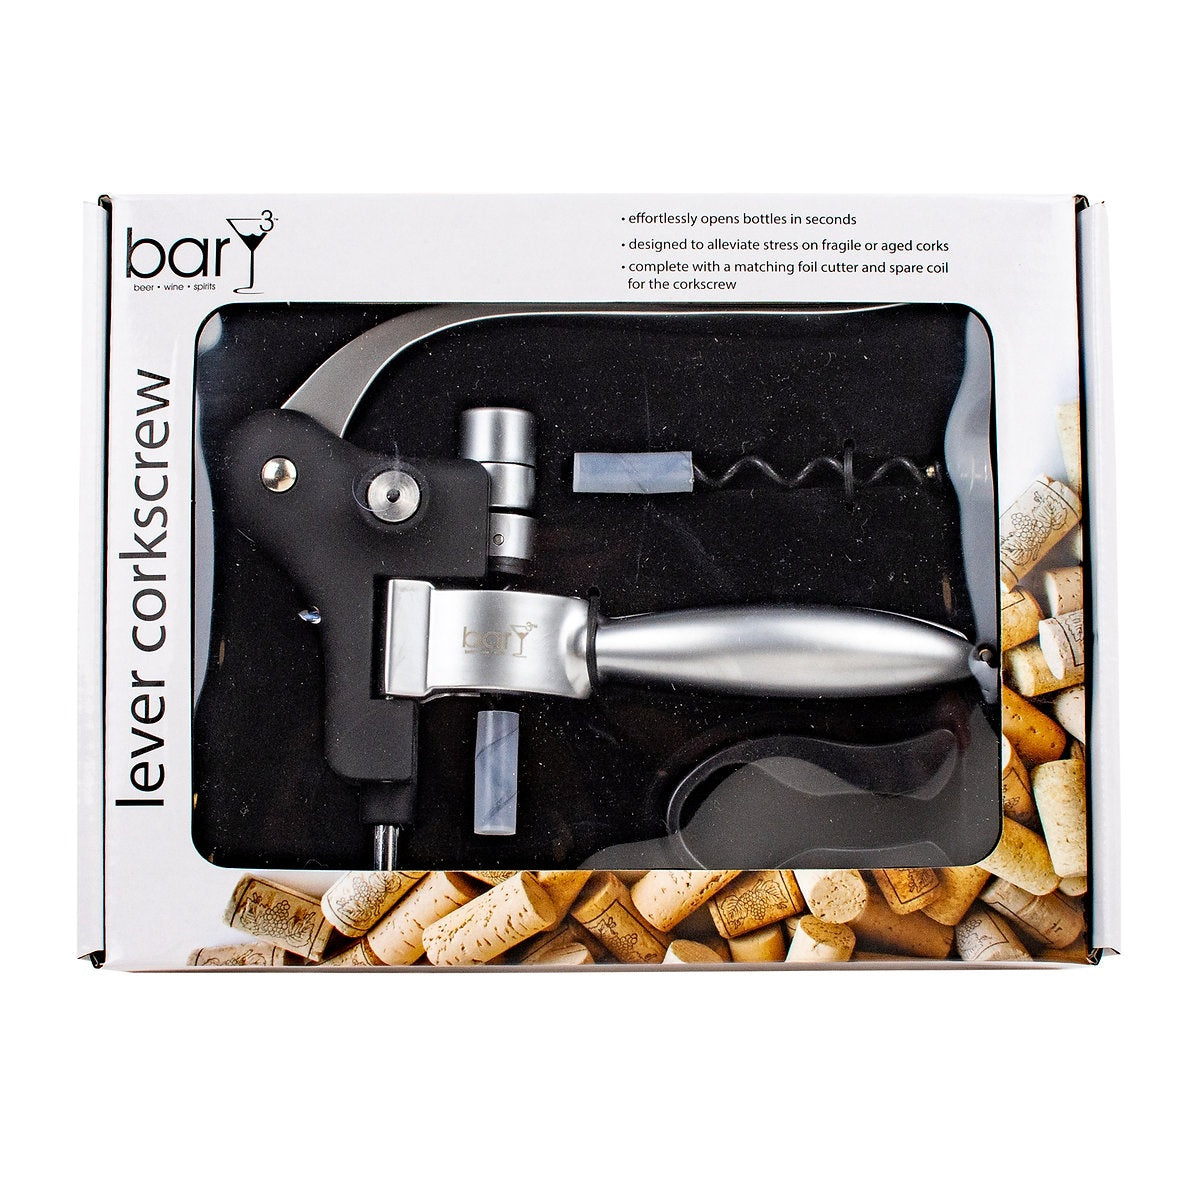 BarY3 BAR-0753 Lever Corkscrew Set, Black/Silver, Stainless Steel